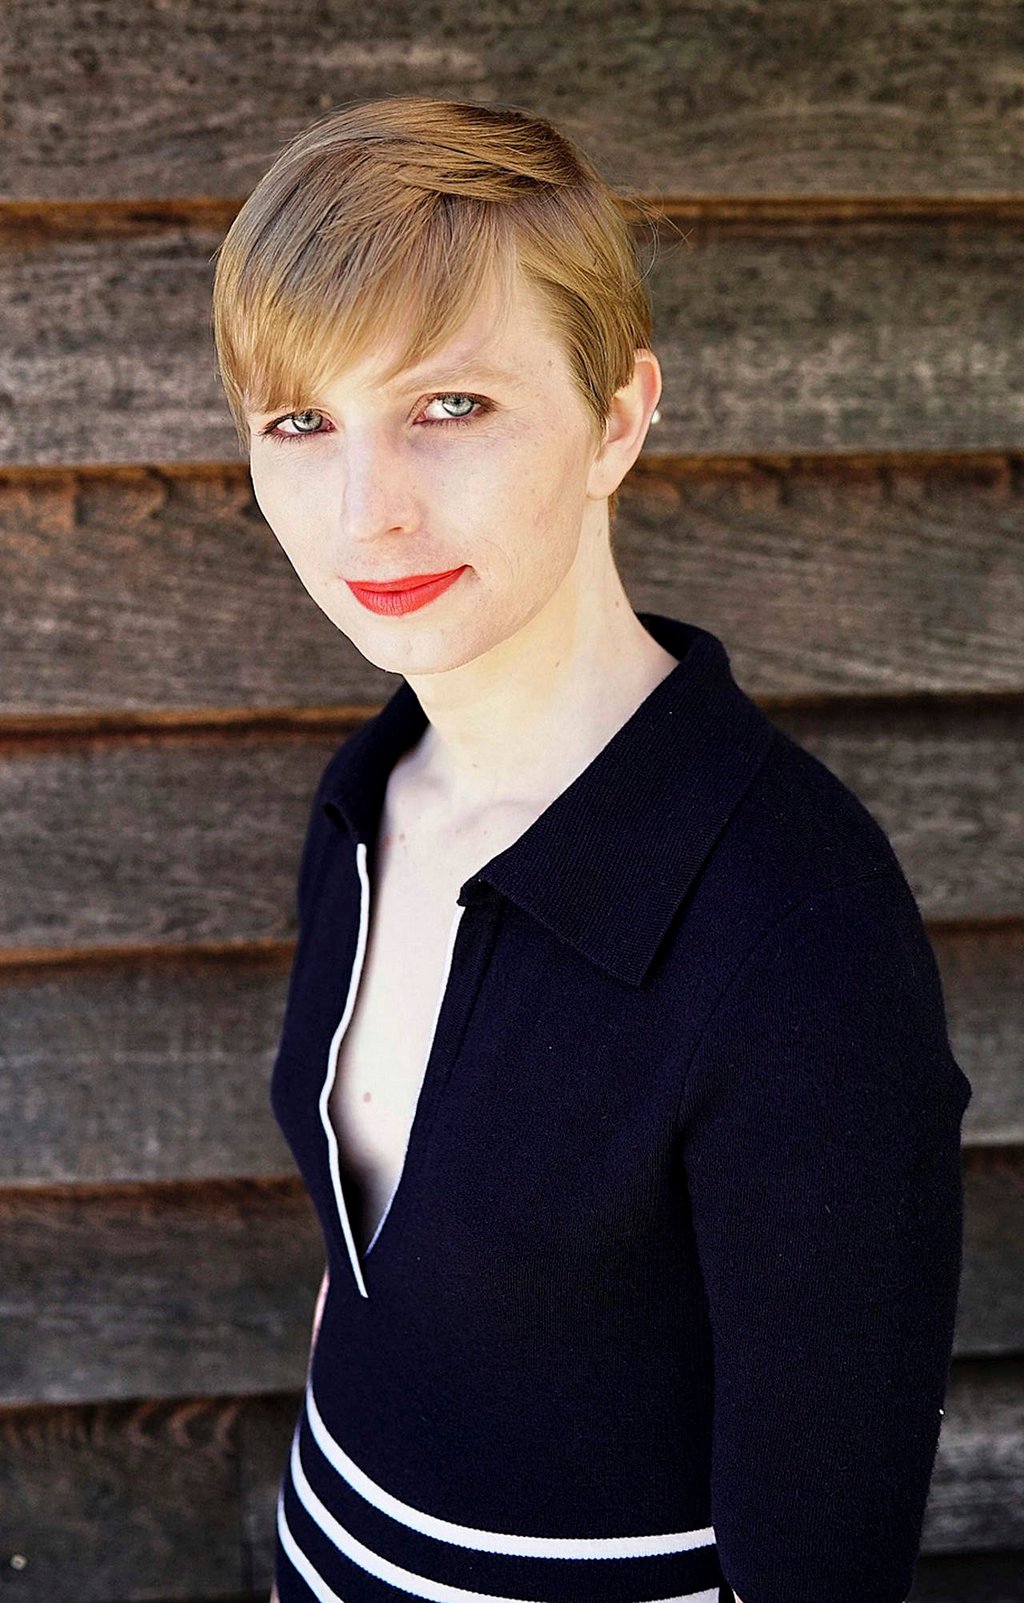 Acusa Chelsea Manning a Canadá de prohibirle entrada al país